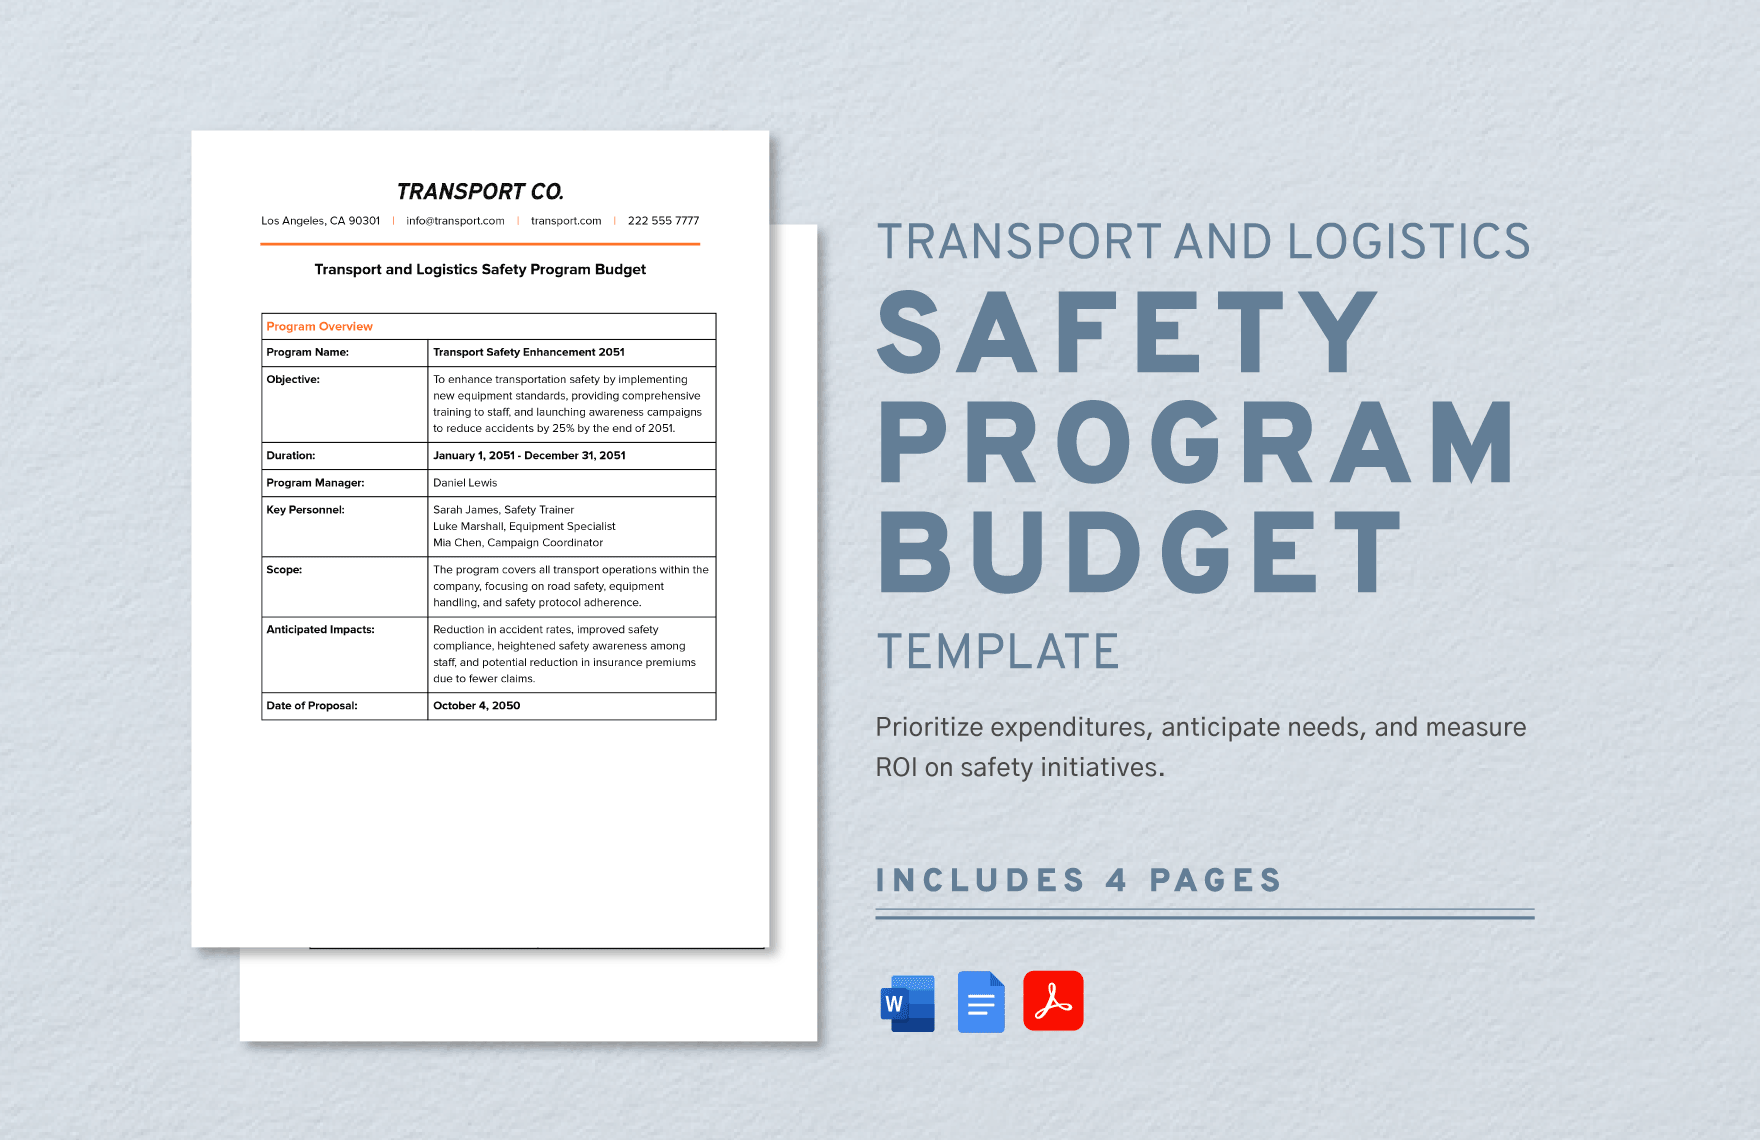 Transport and Logistics Safety Program Budget Template